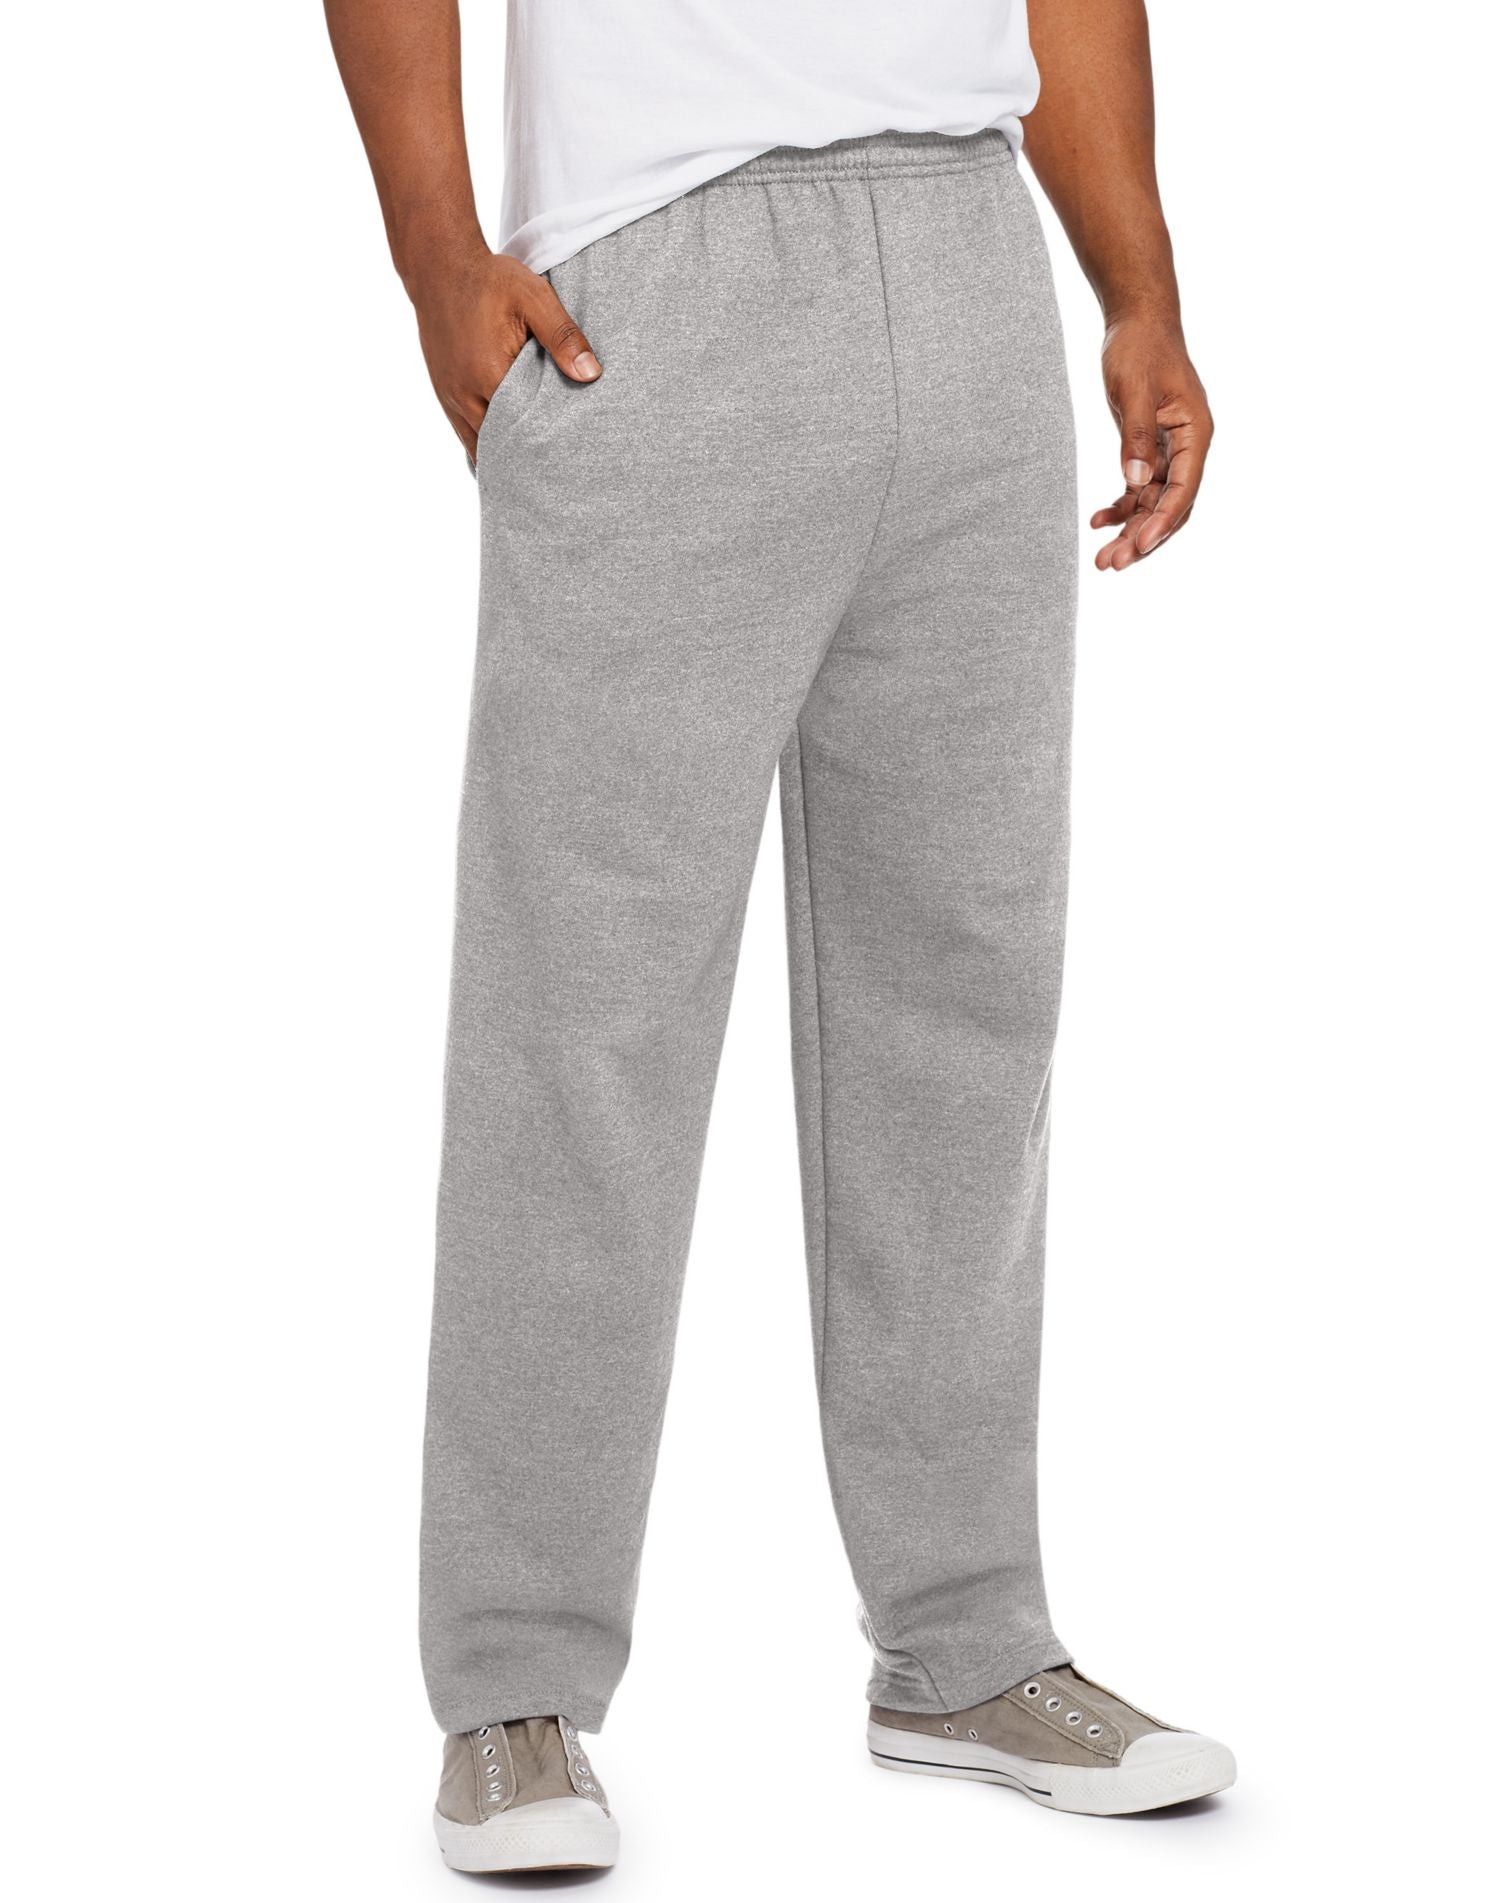 O5995 - Hanes Mens Comfort Soft Eco Smart Fleece Sweatpants